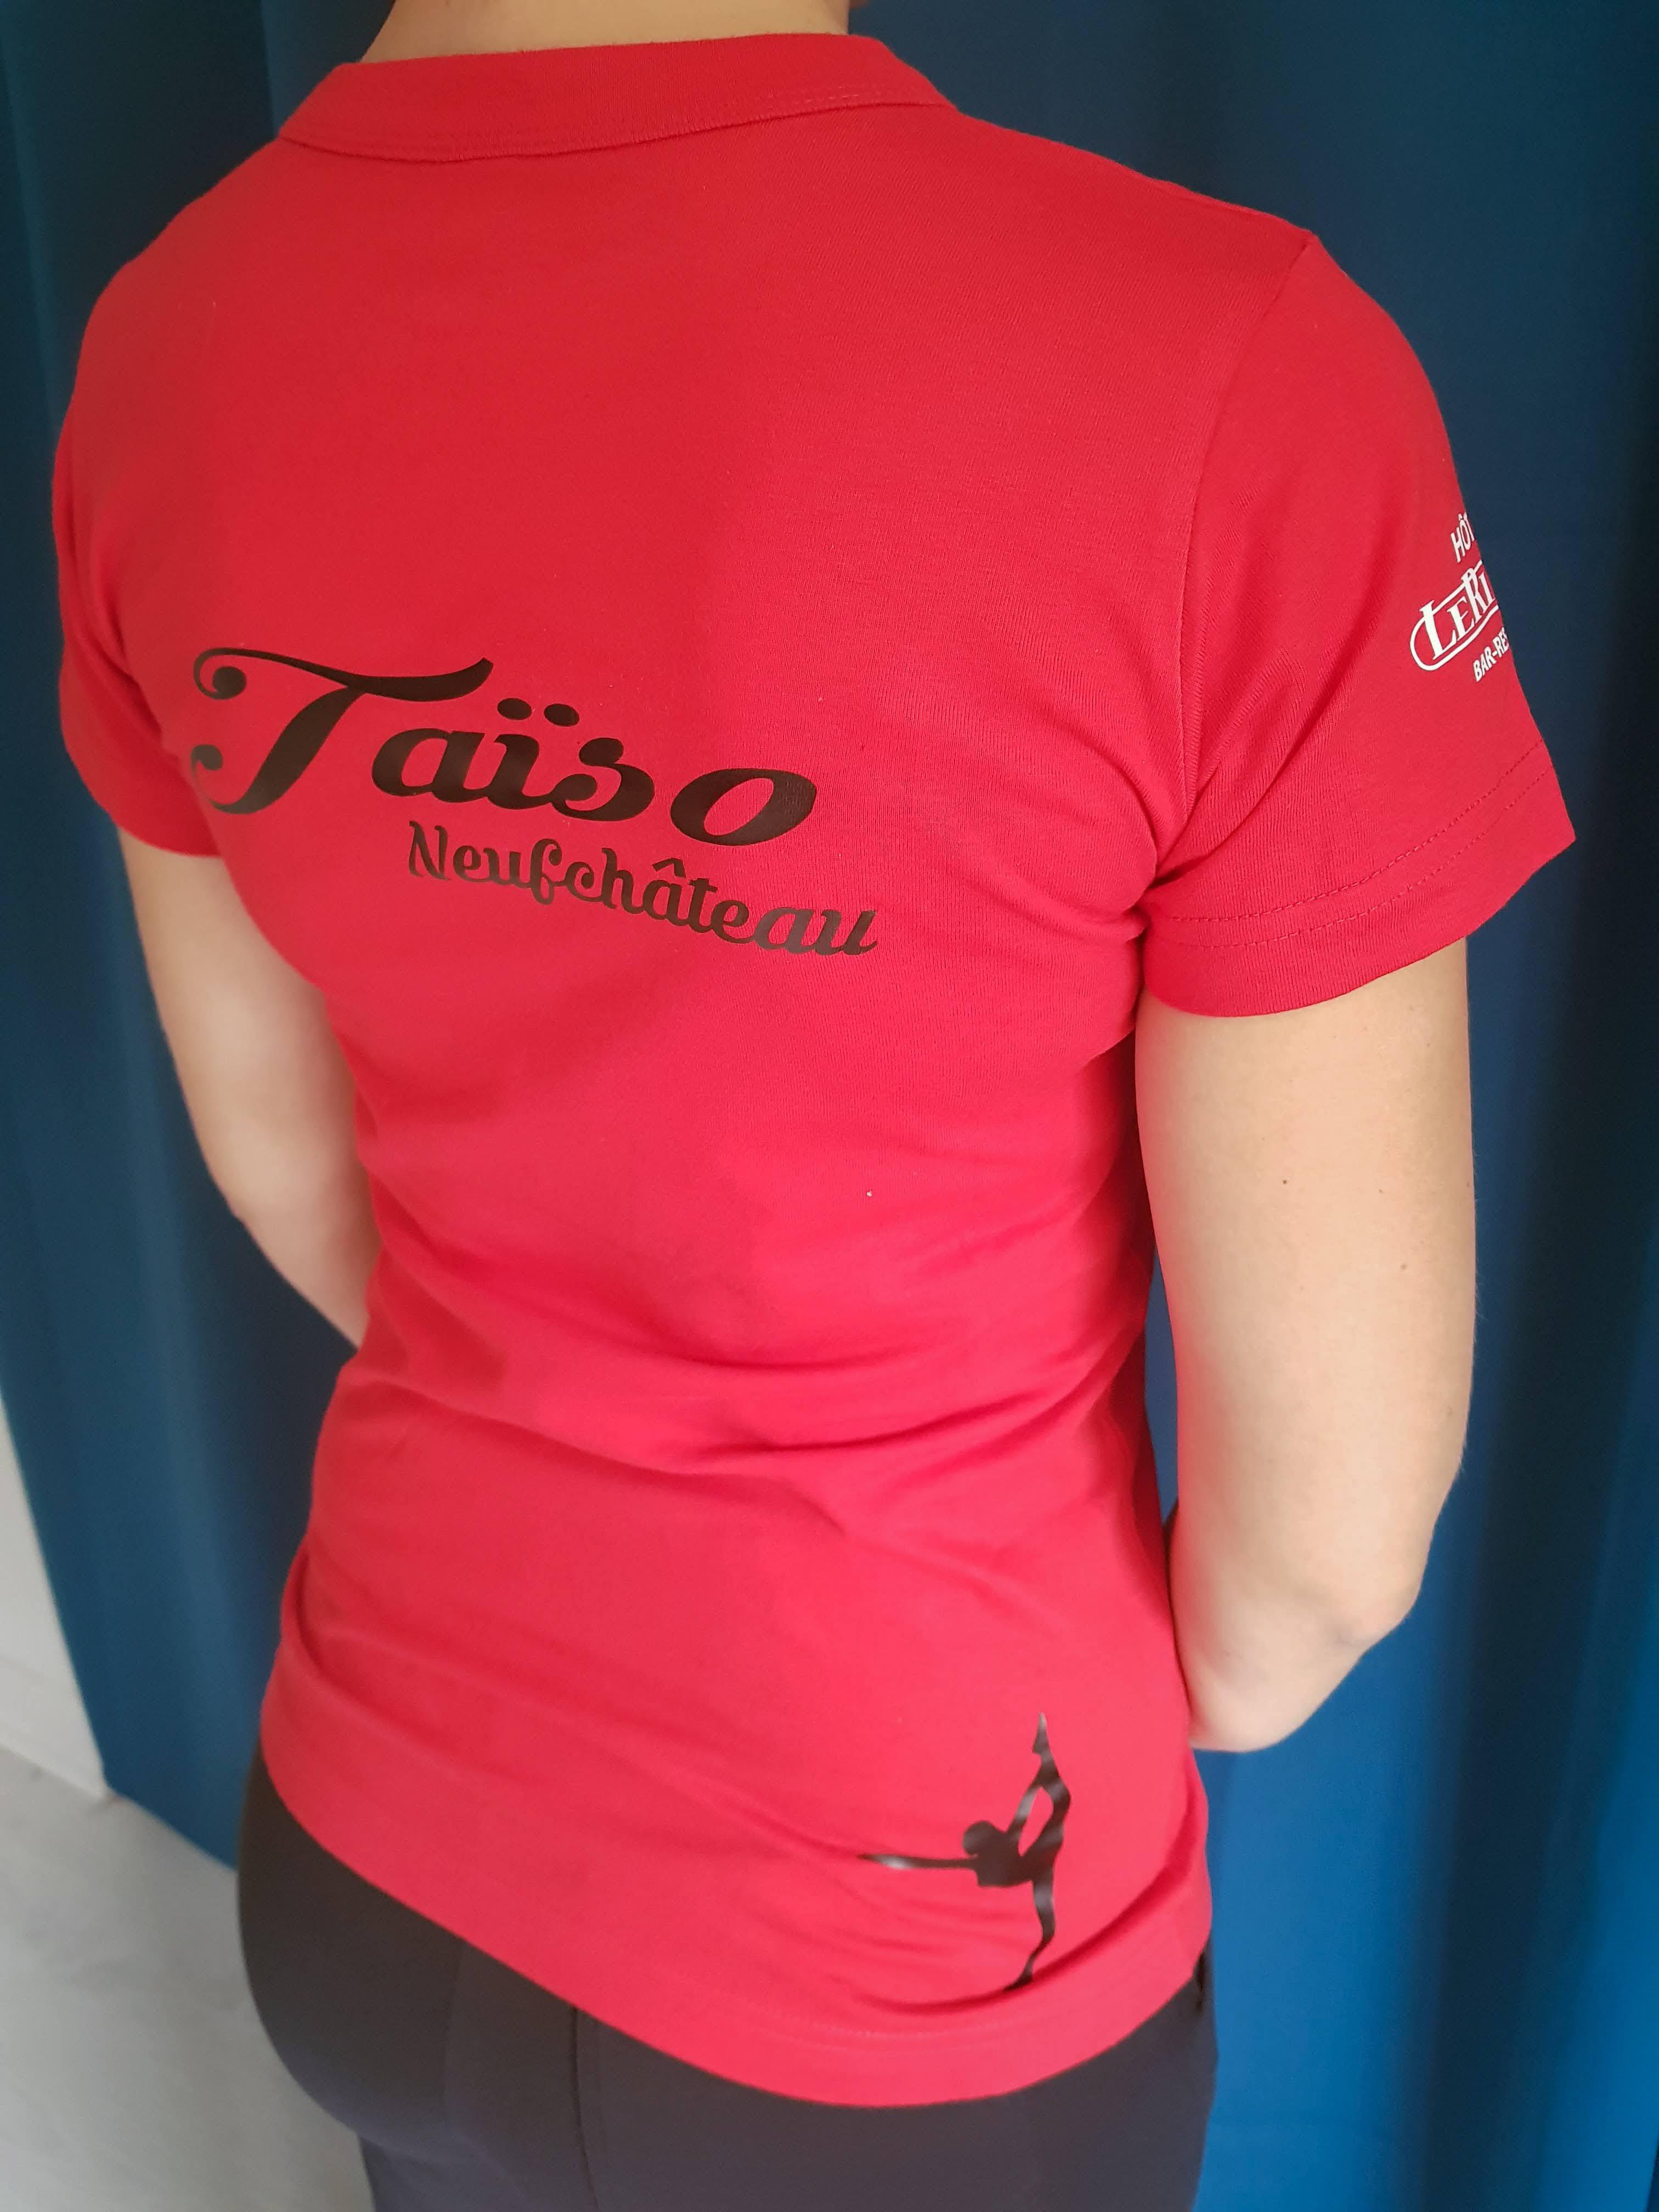 DESTOCK T-shirt Taïso Judo Club Neufchâteau